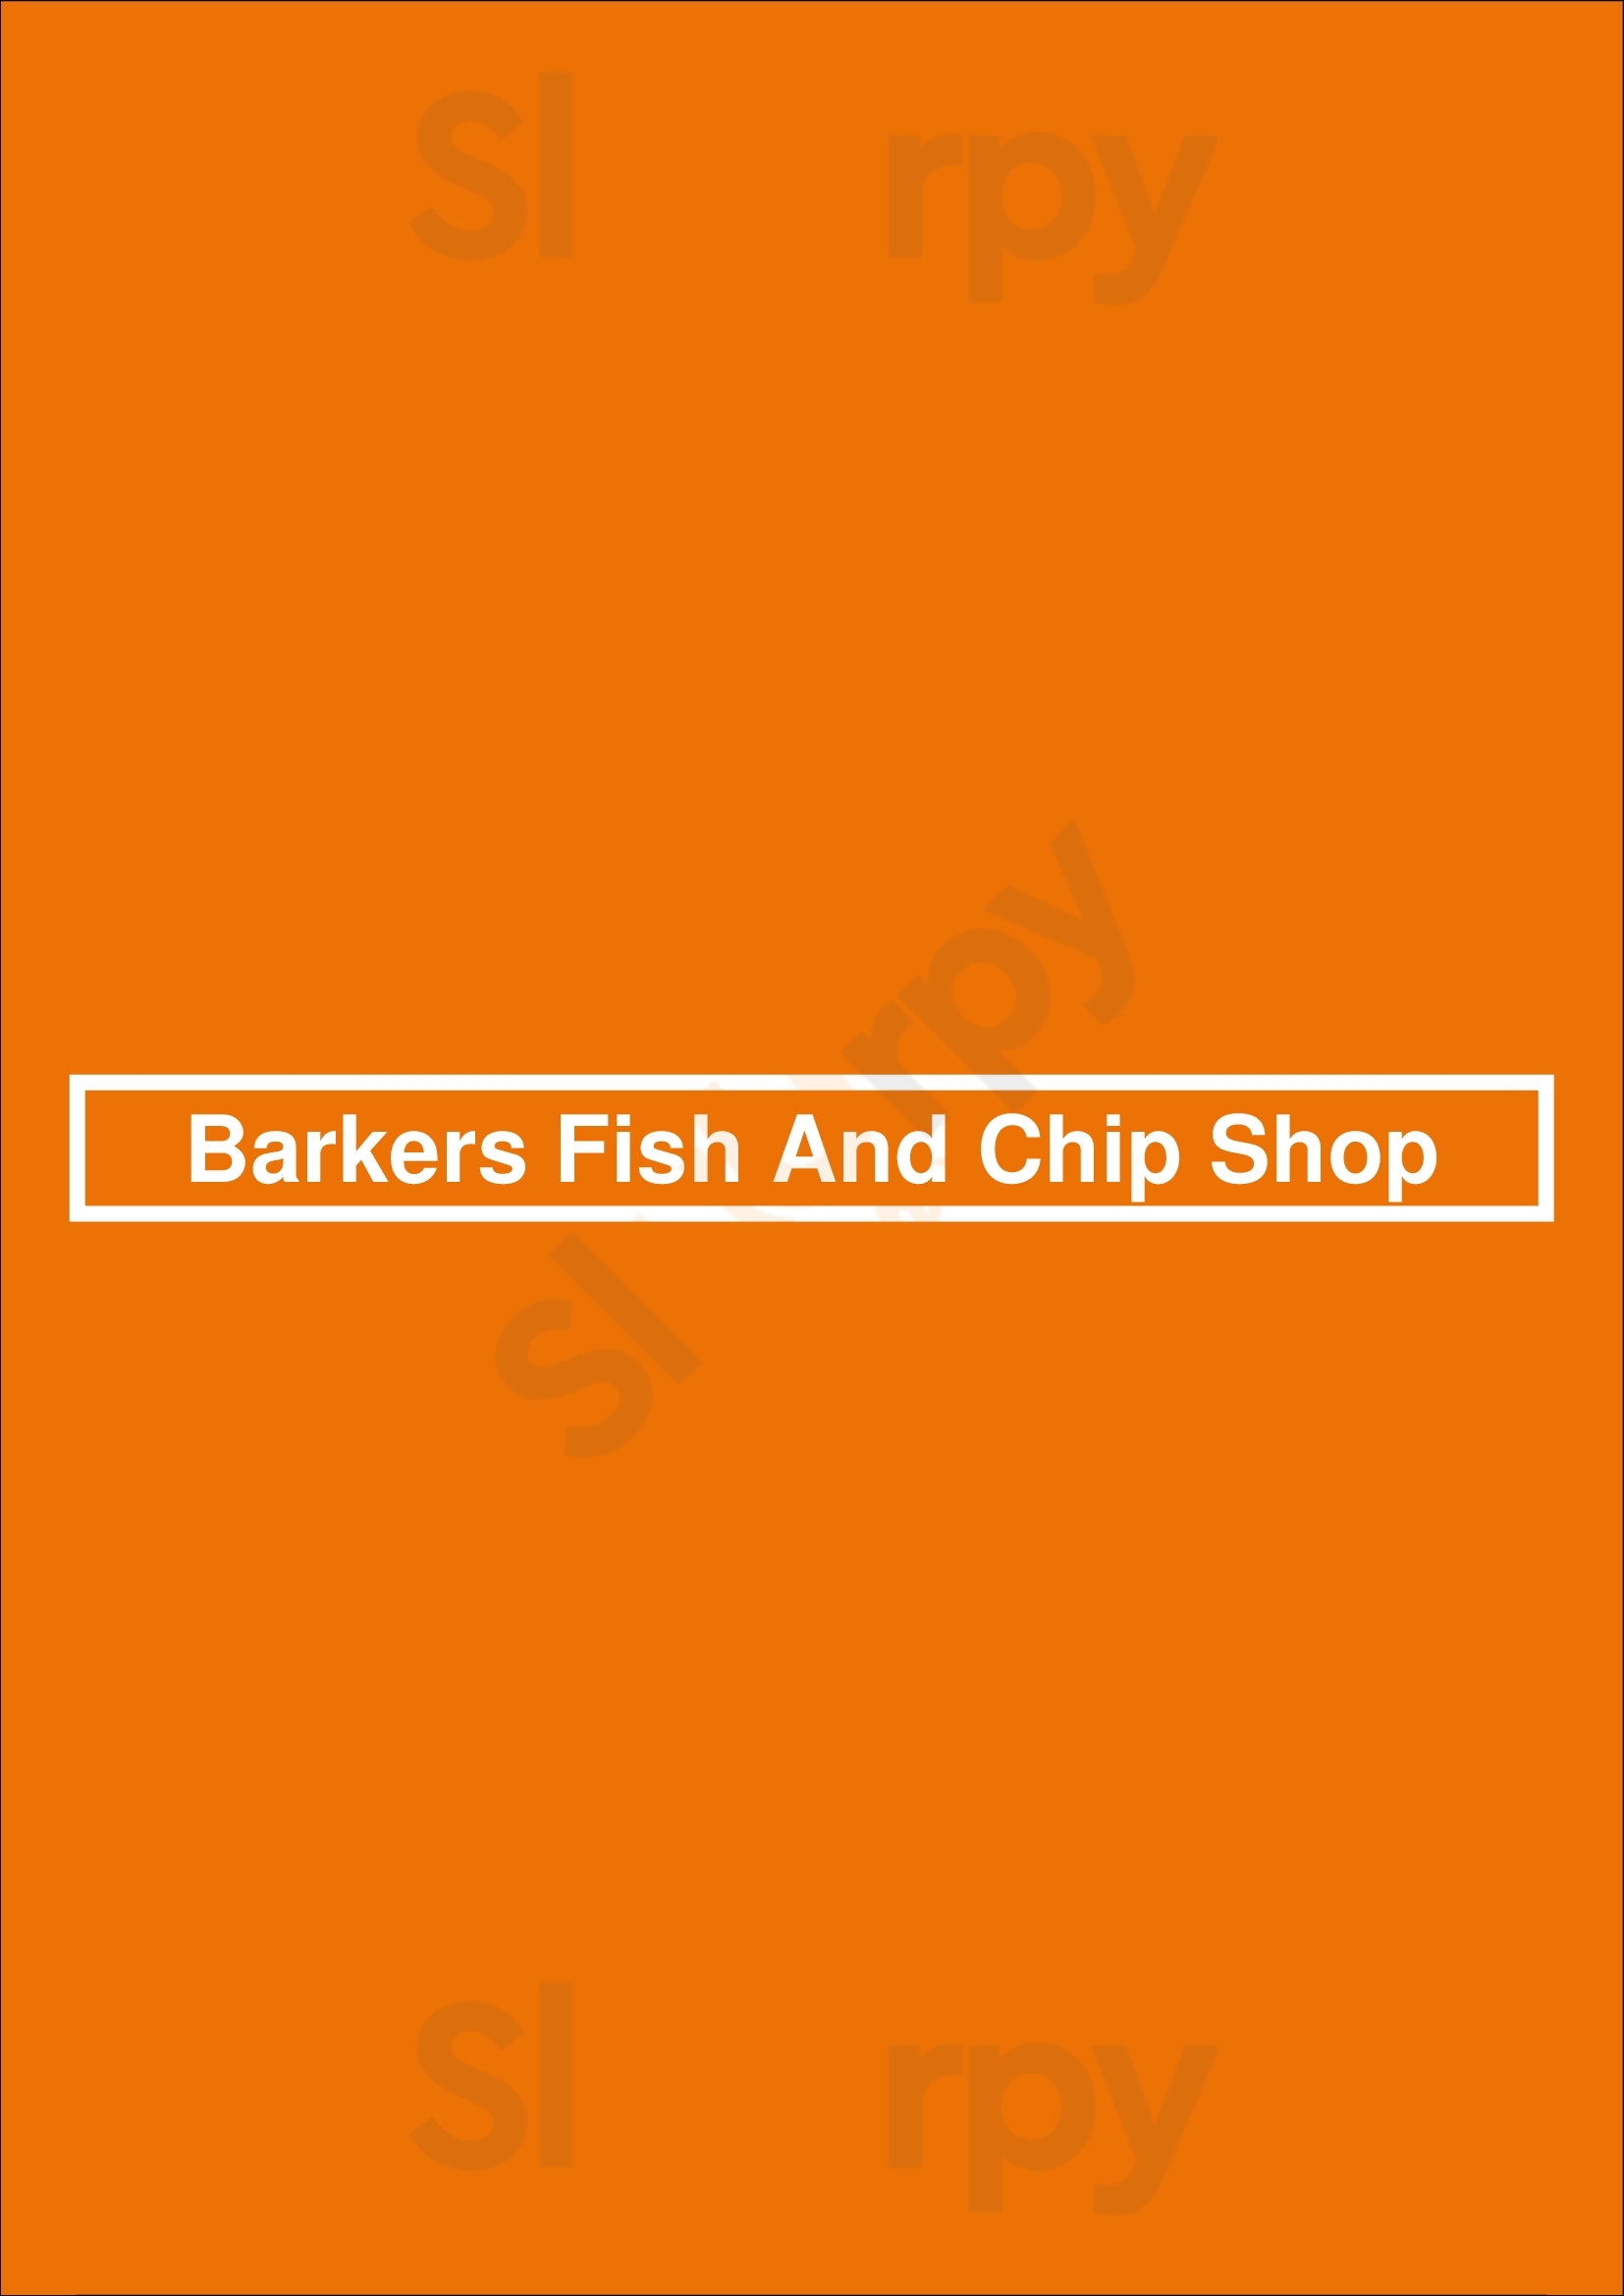 Barkers Fish And Chip Shop Abbots Langley Menu - 1